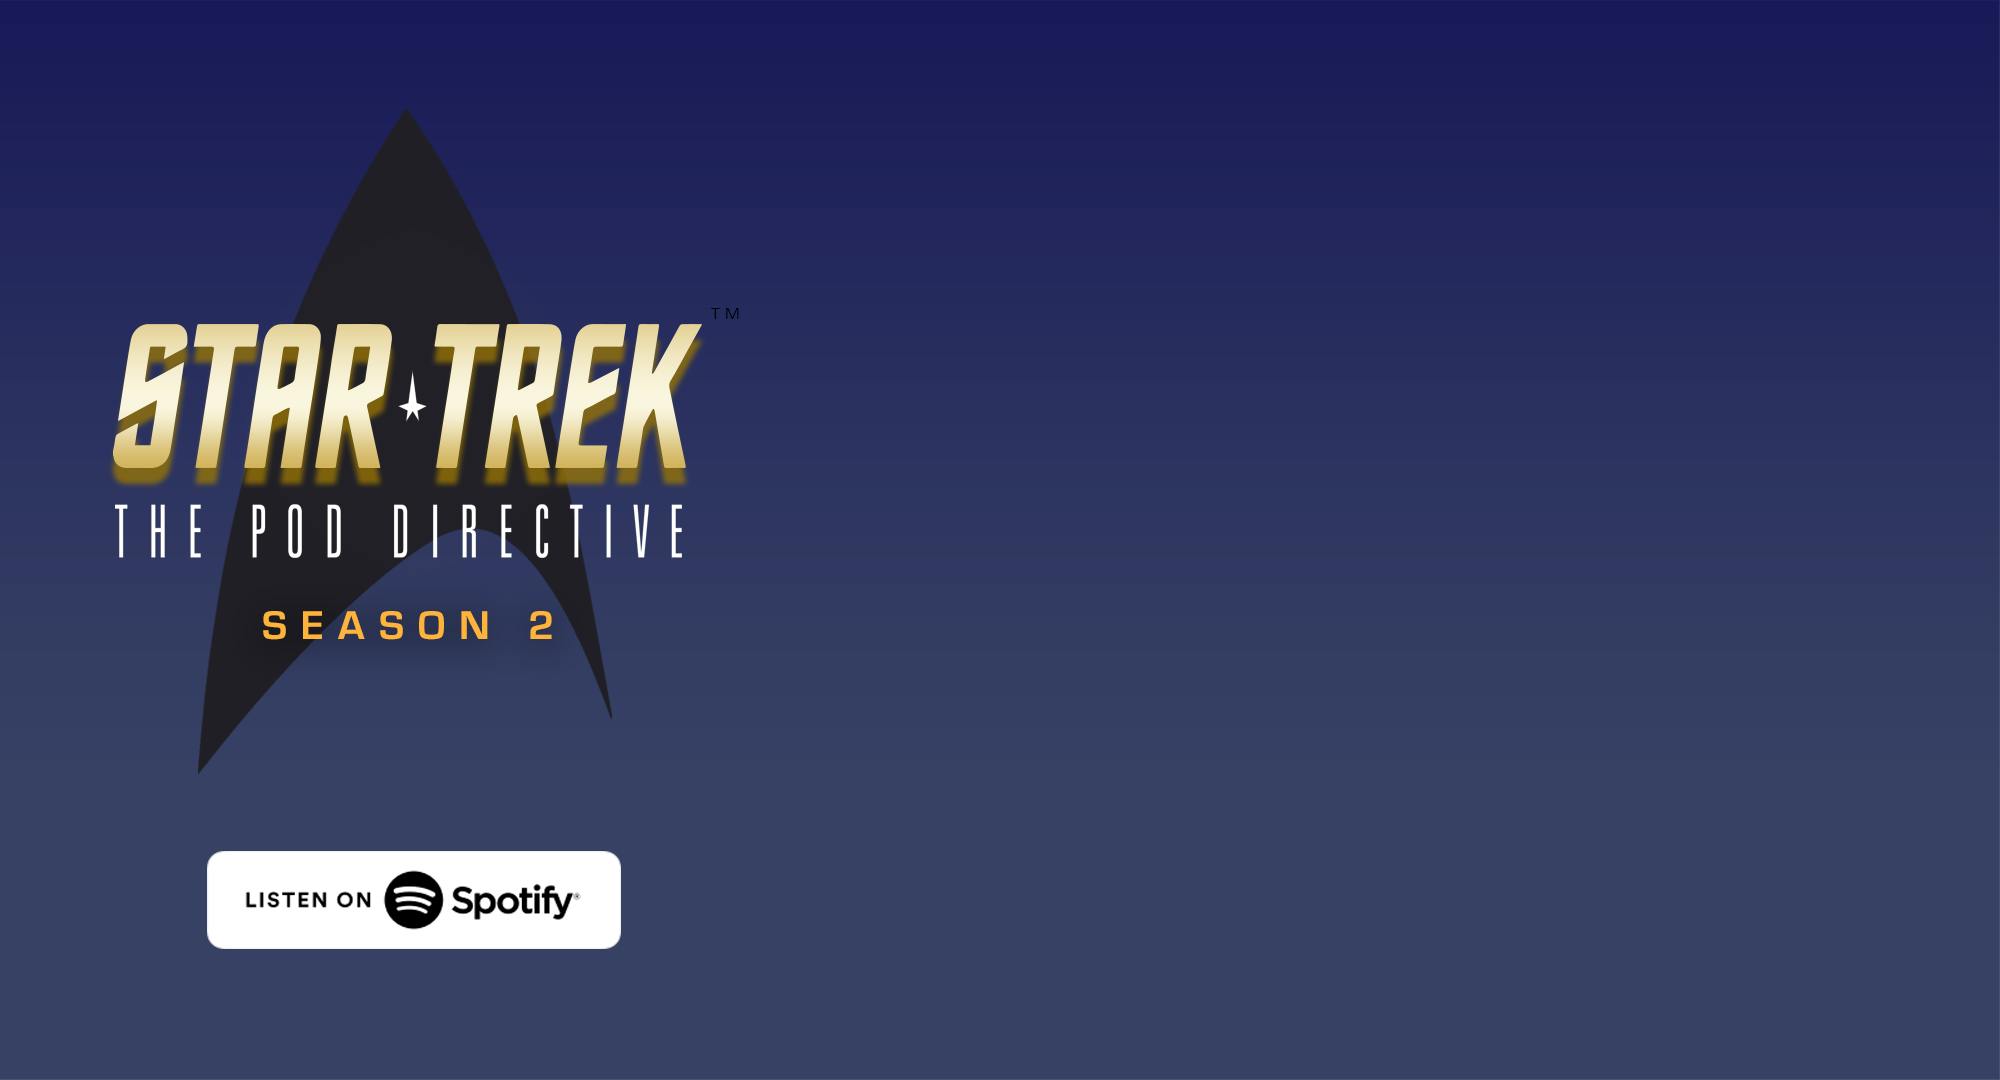 Star Trek: The Pod Directive, Spotify